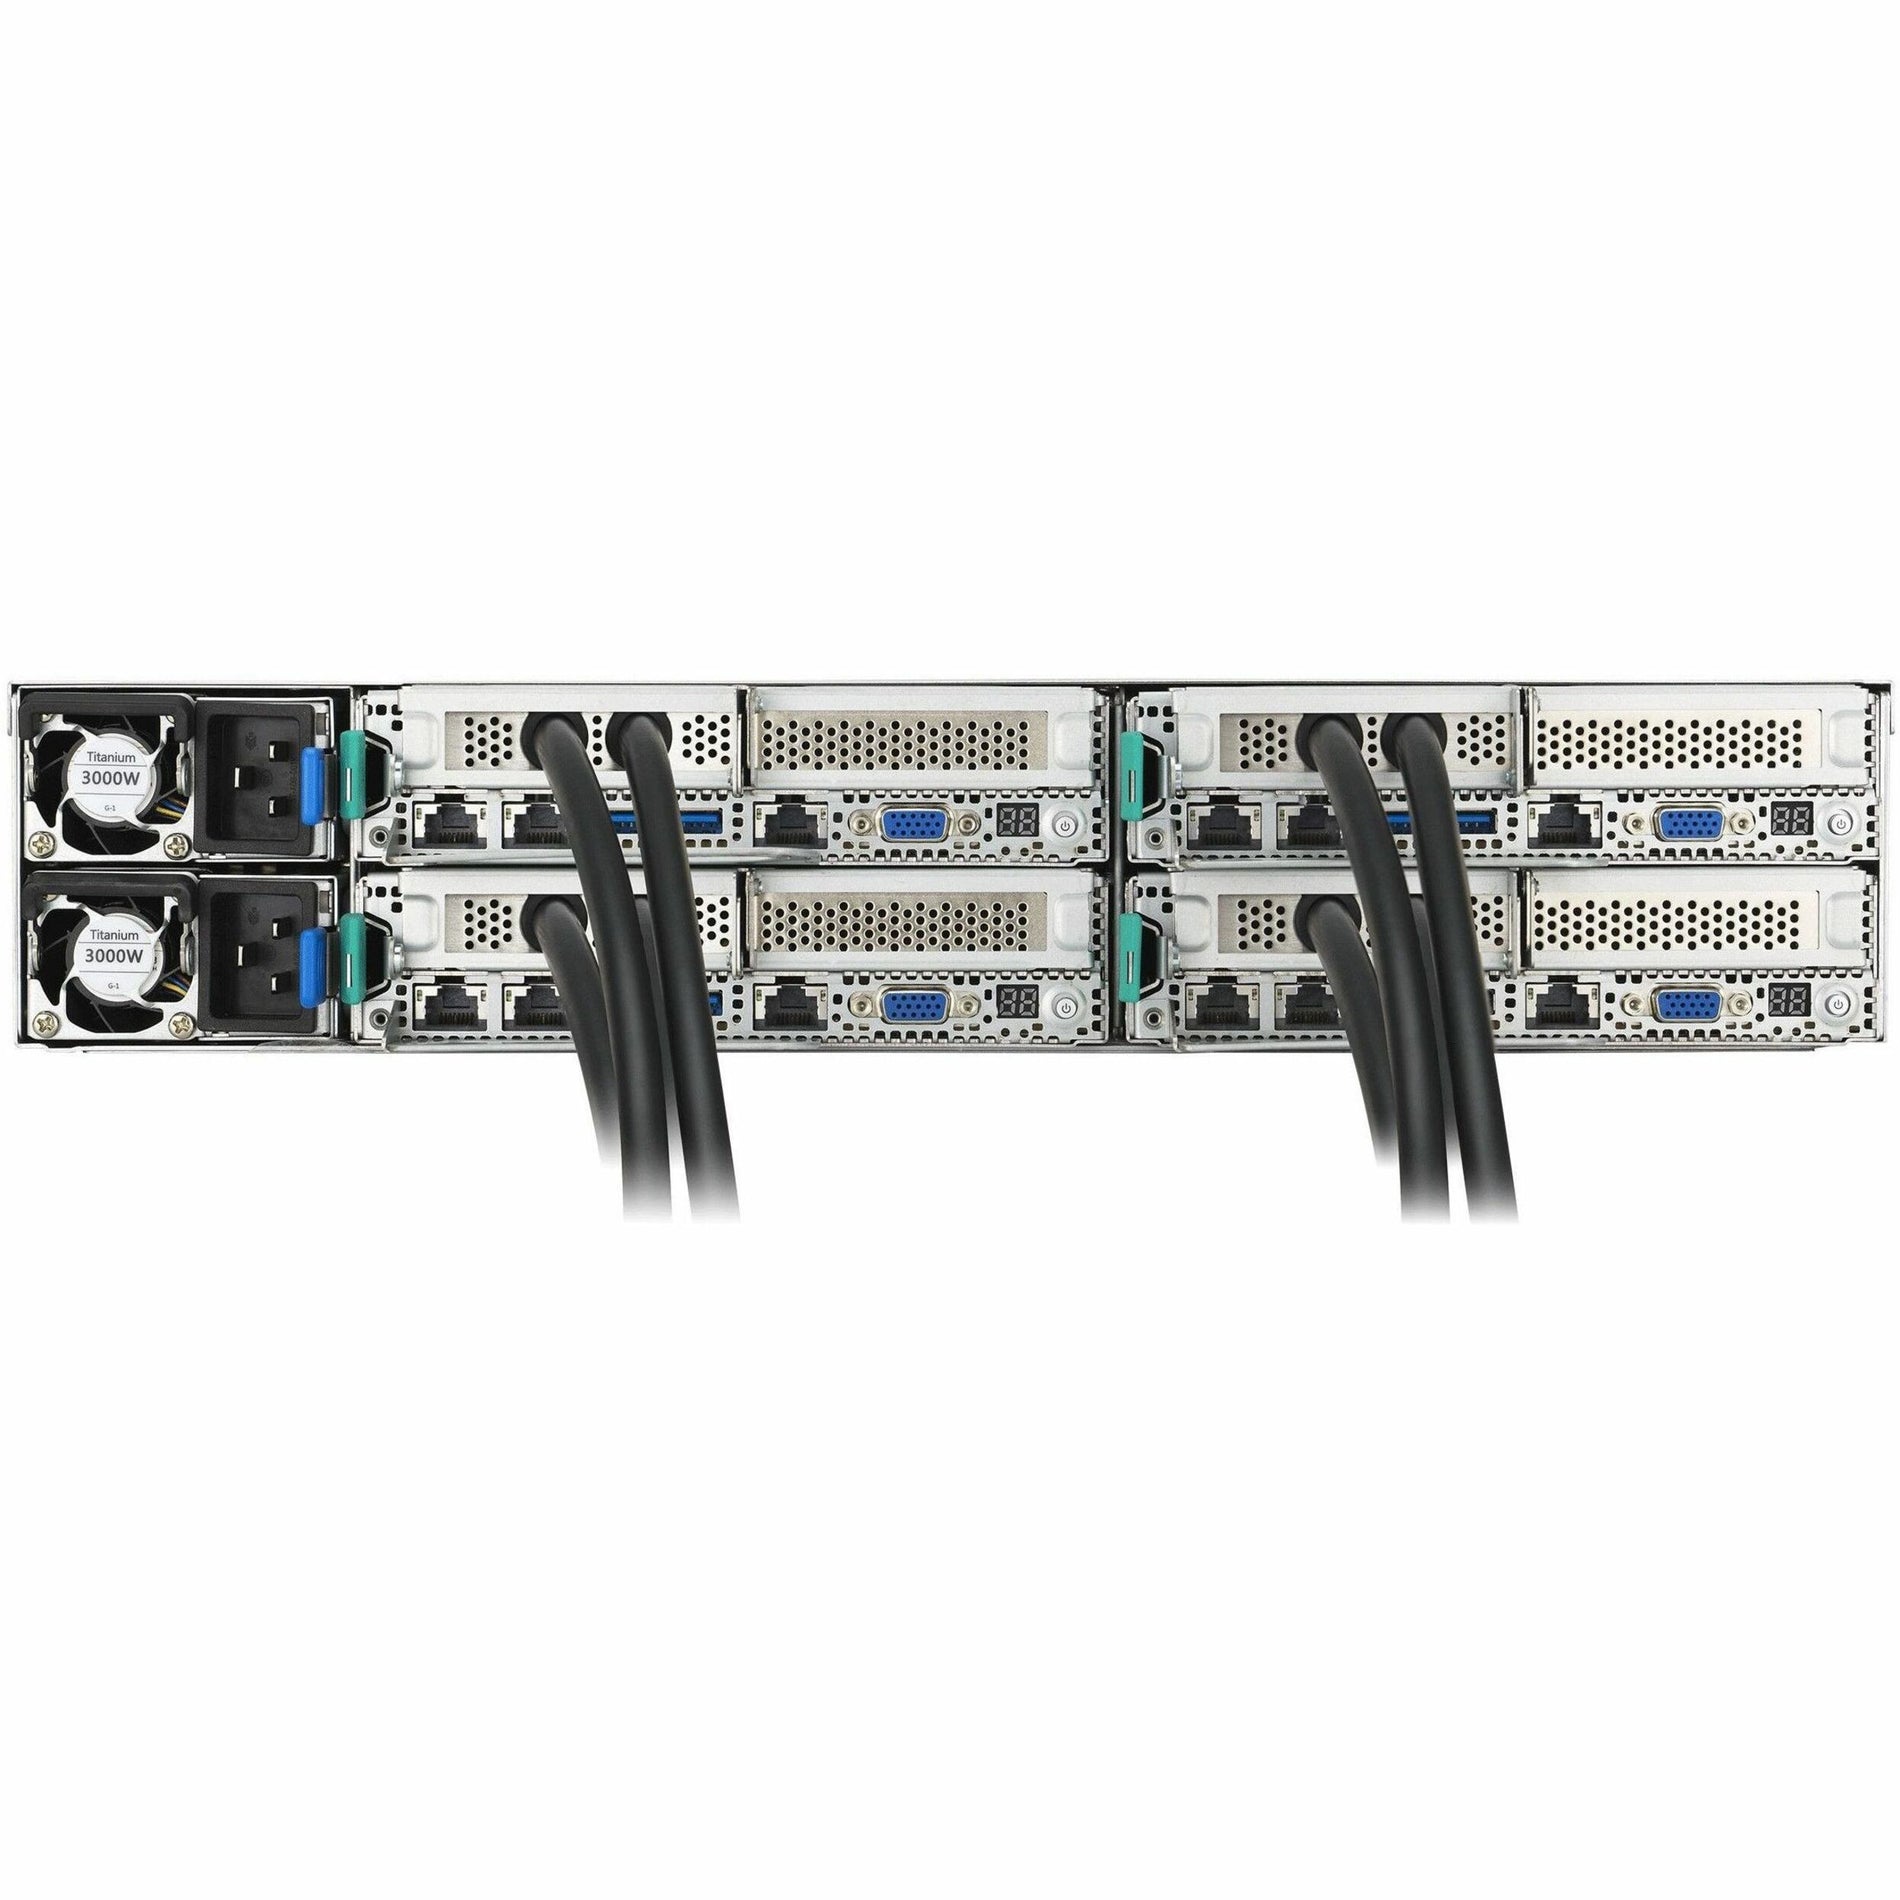 Asus RS720Q-E11-RS8U-3WSTEVHS Barebone System, Rack-mountable, 2U, 10 Gigabit Ethernet, 2x USB 3.0 Ports